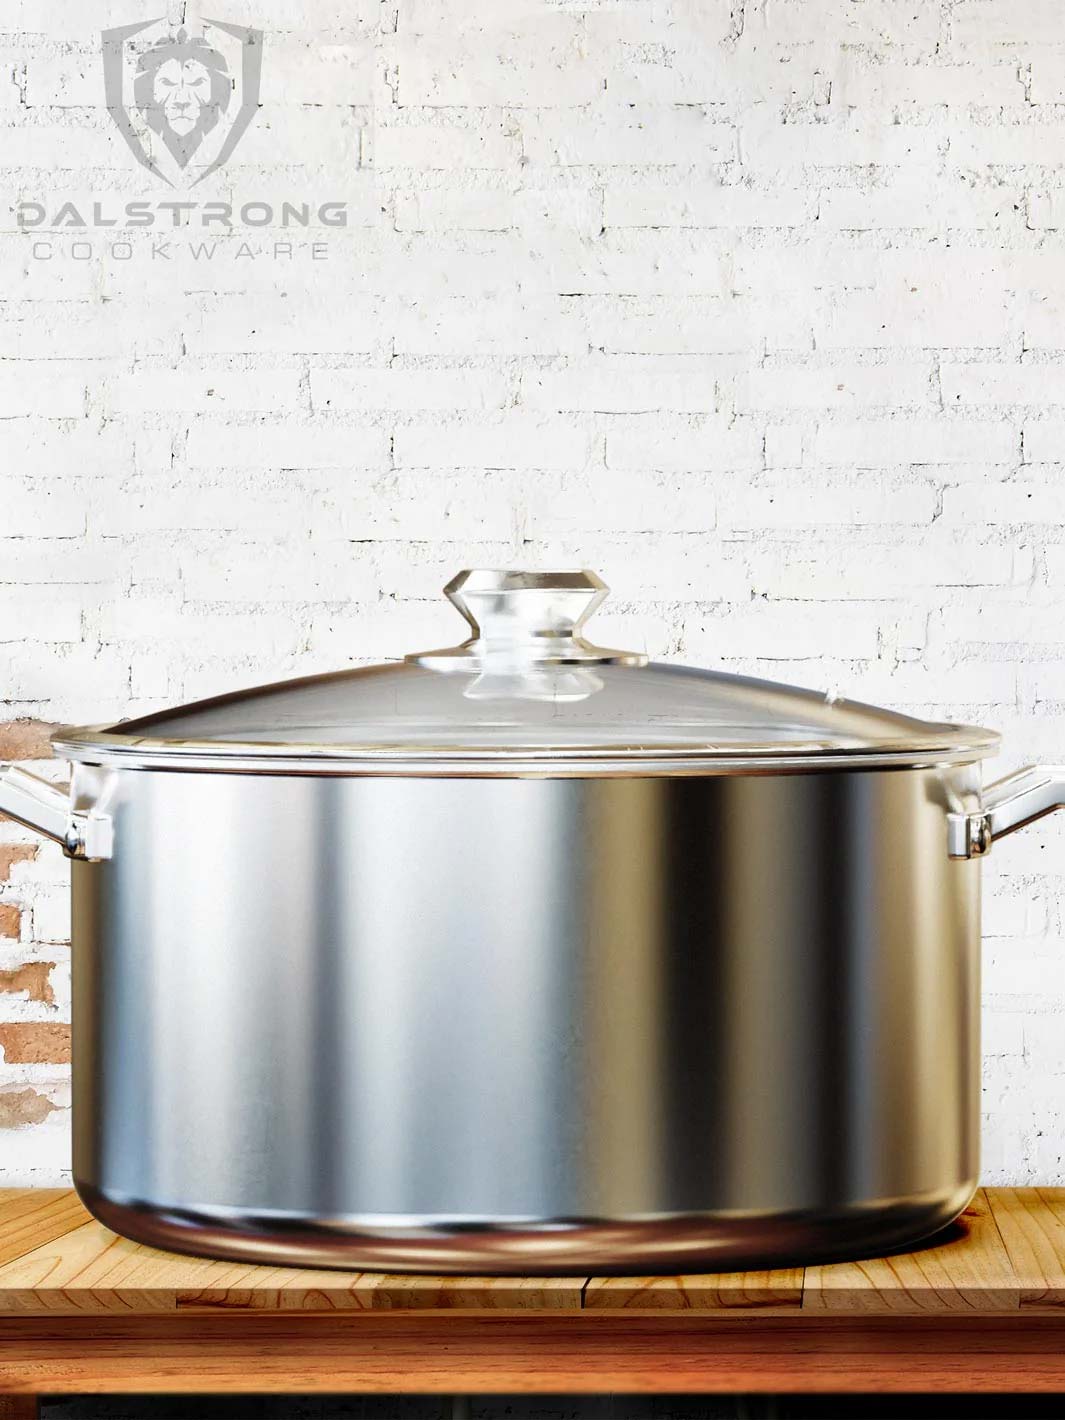 Choice Aluminum 6-Piece Pot/Pan Set with 8, 12 Frying Pans, and 12 Qt.  Stock Pot and Covers